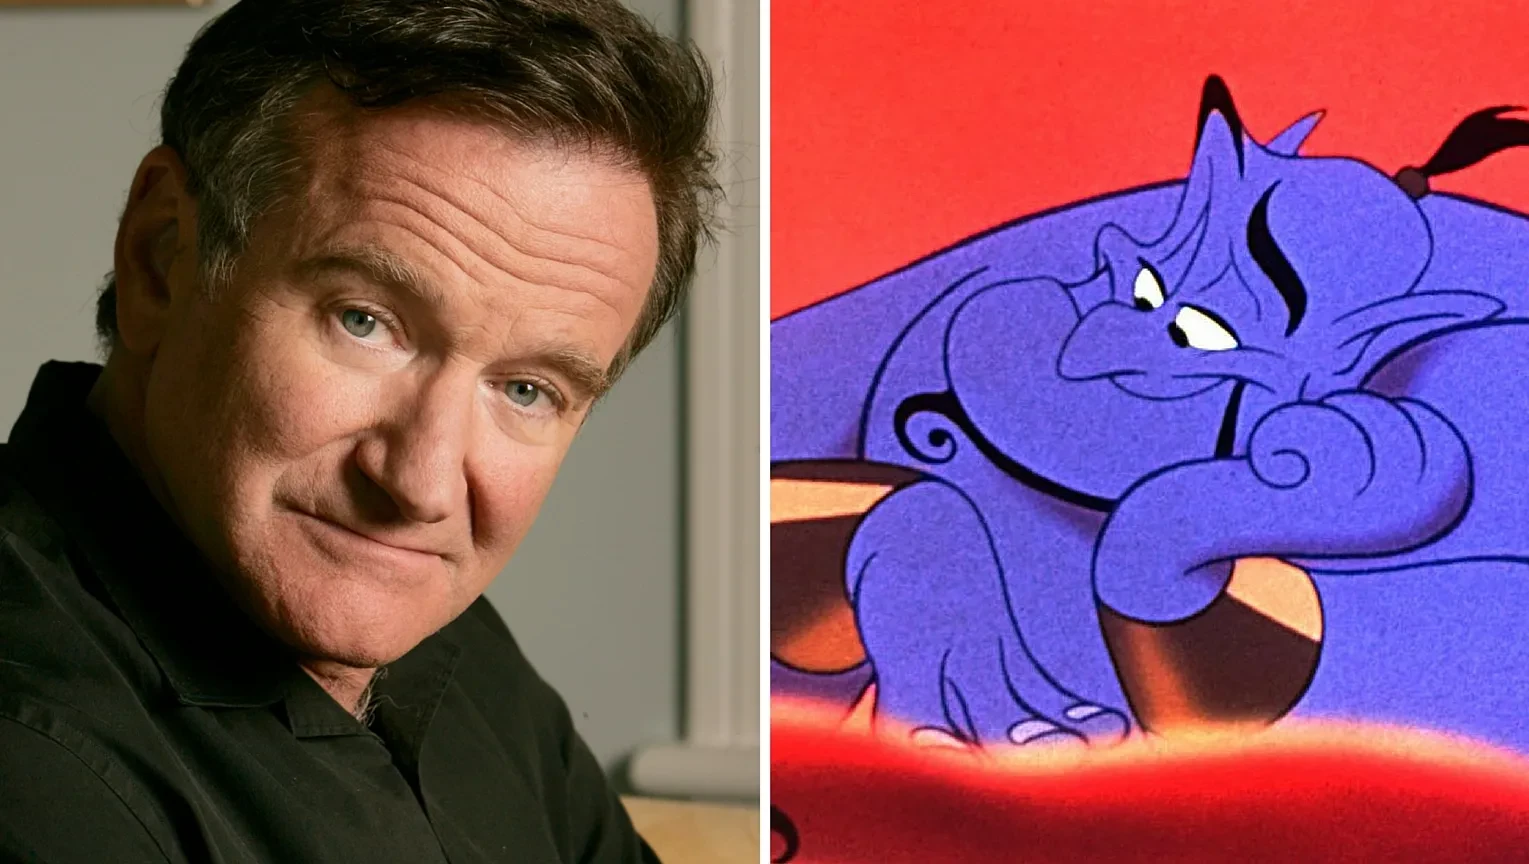 Genie was written just for Robin Williams